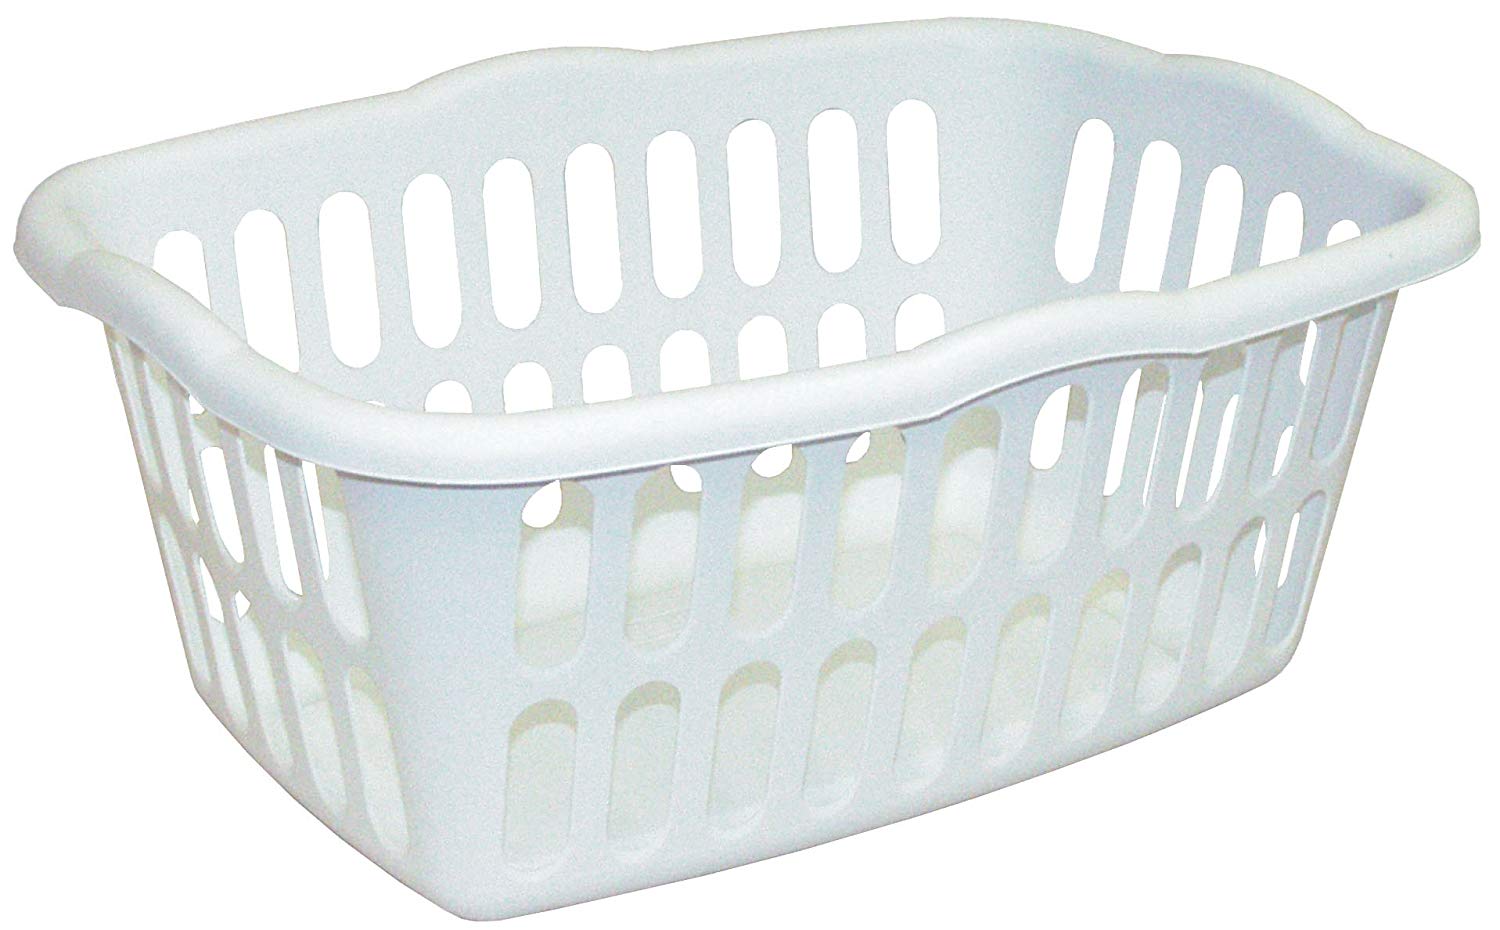 Laundry Basket amazon.com: sterilite rectangular laundry basket, white: home u0026 kitchen PSHQNTO